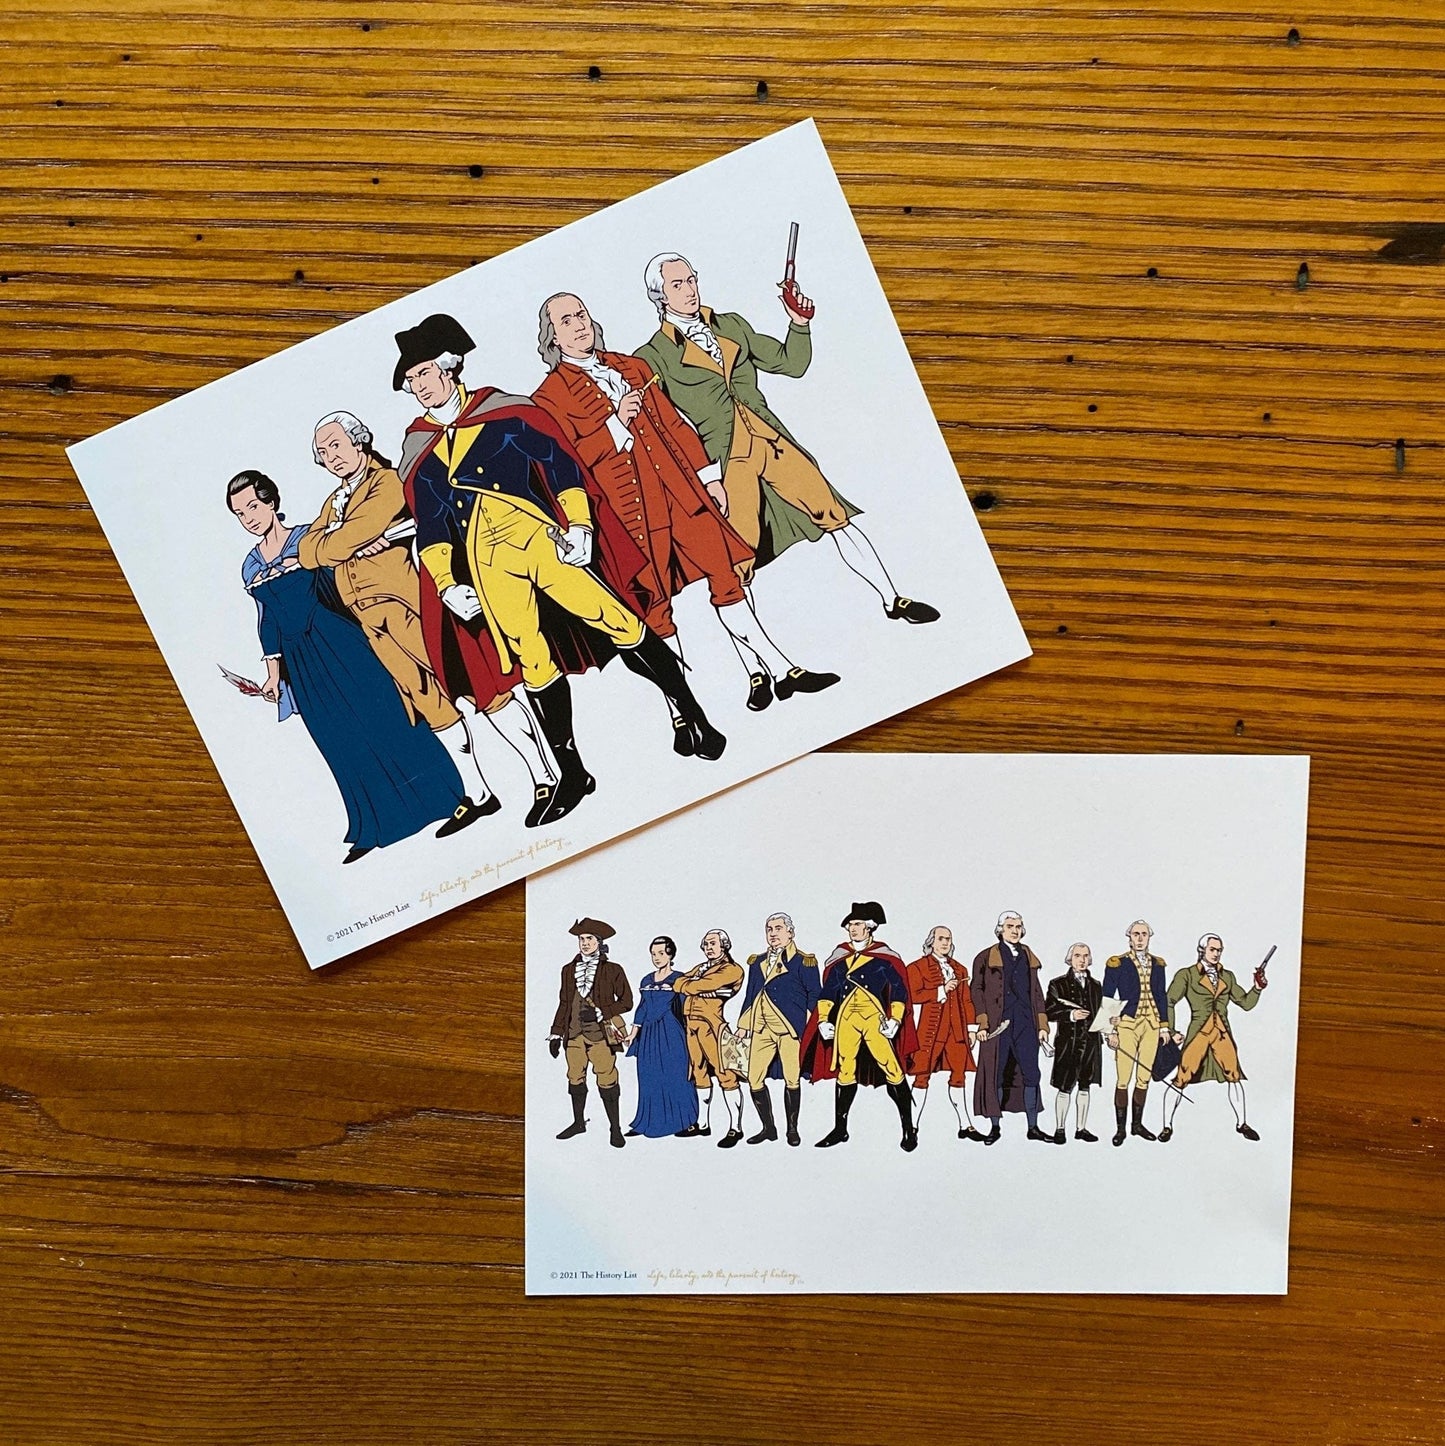 Five "Revolutionary Superheroes" with George Washington Small framed print - 5" x 7"